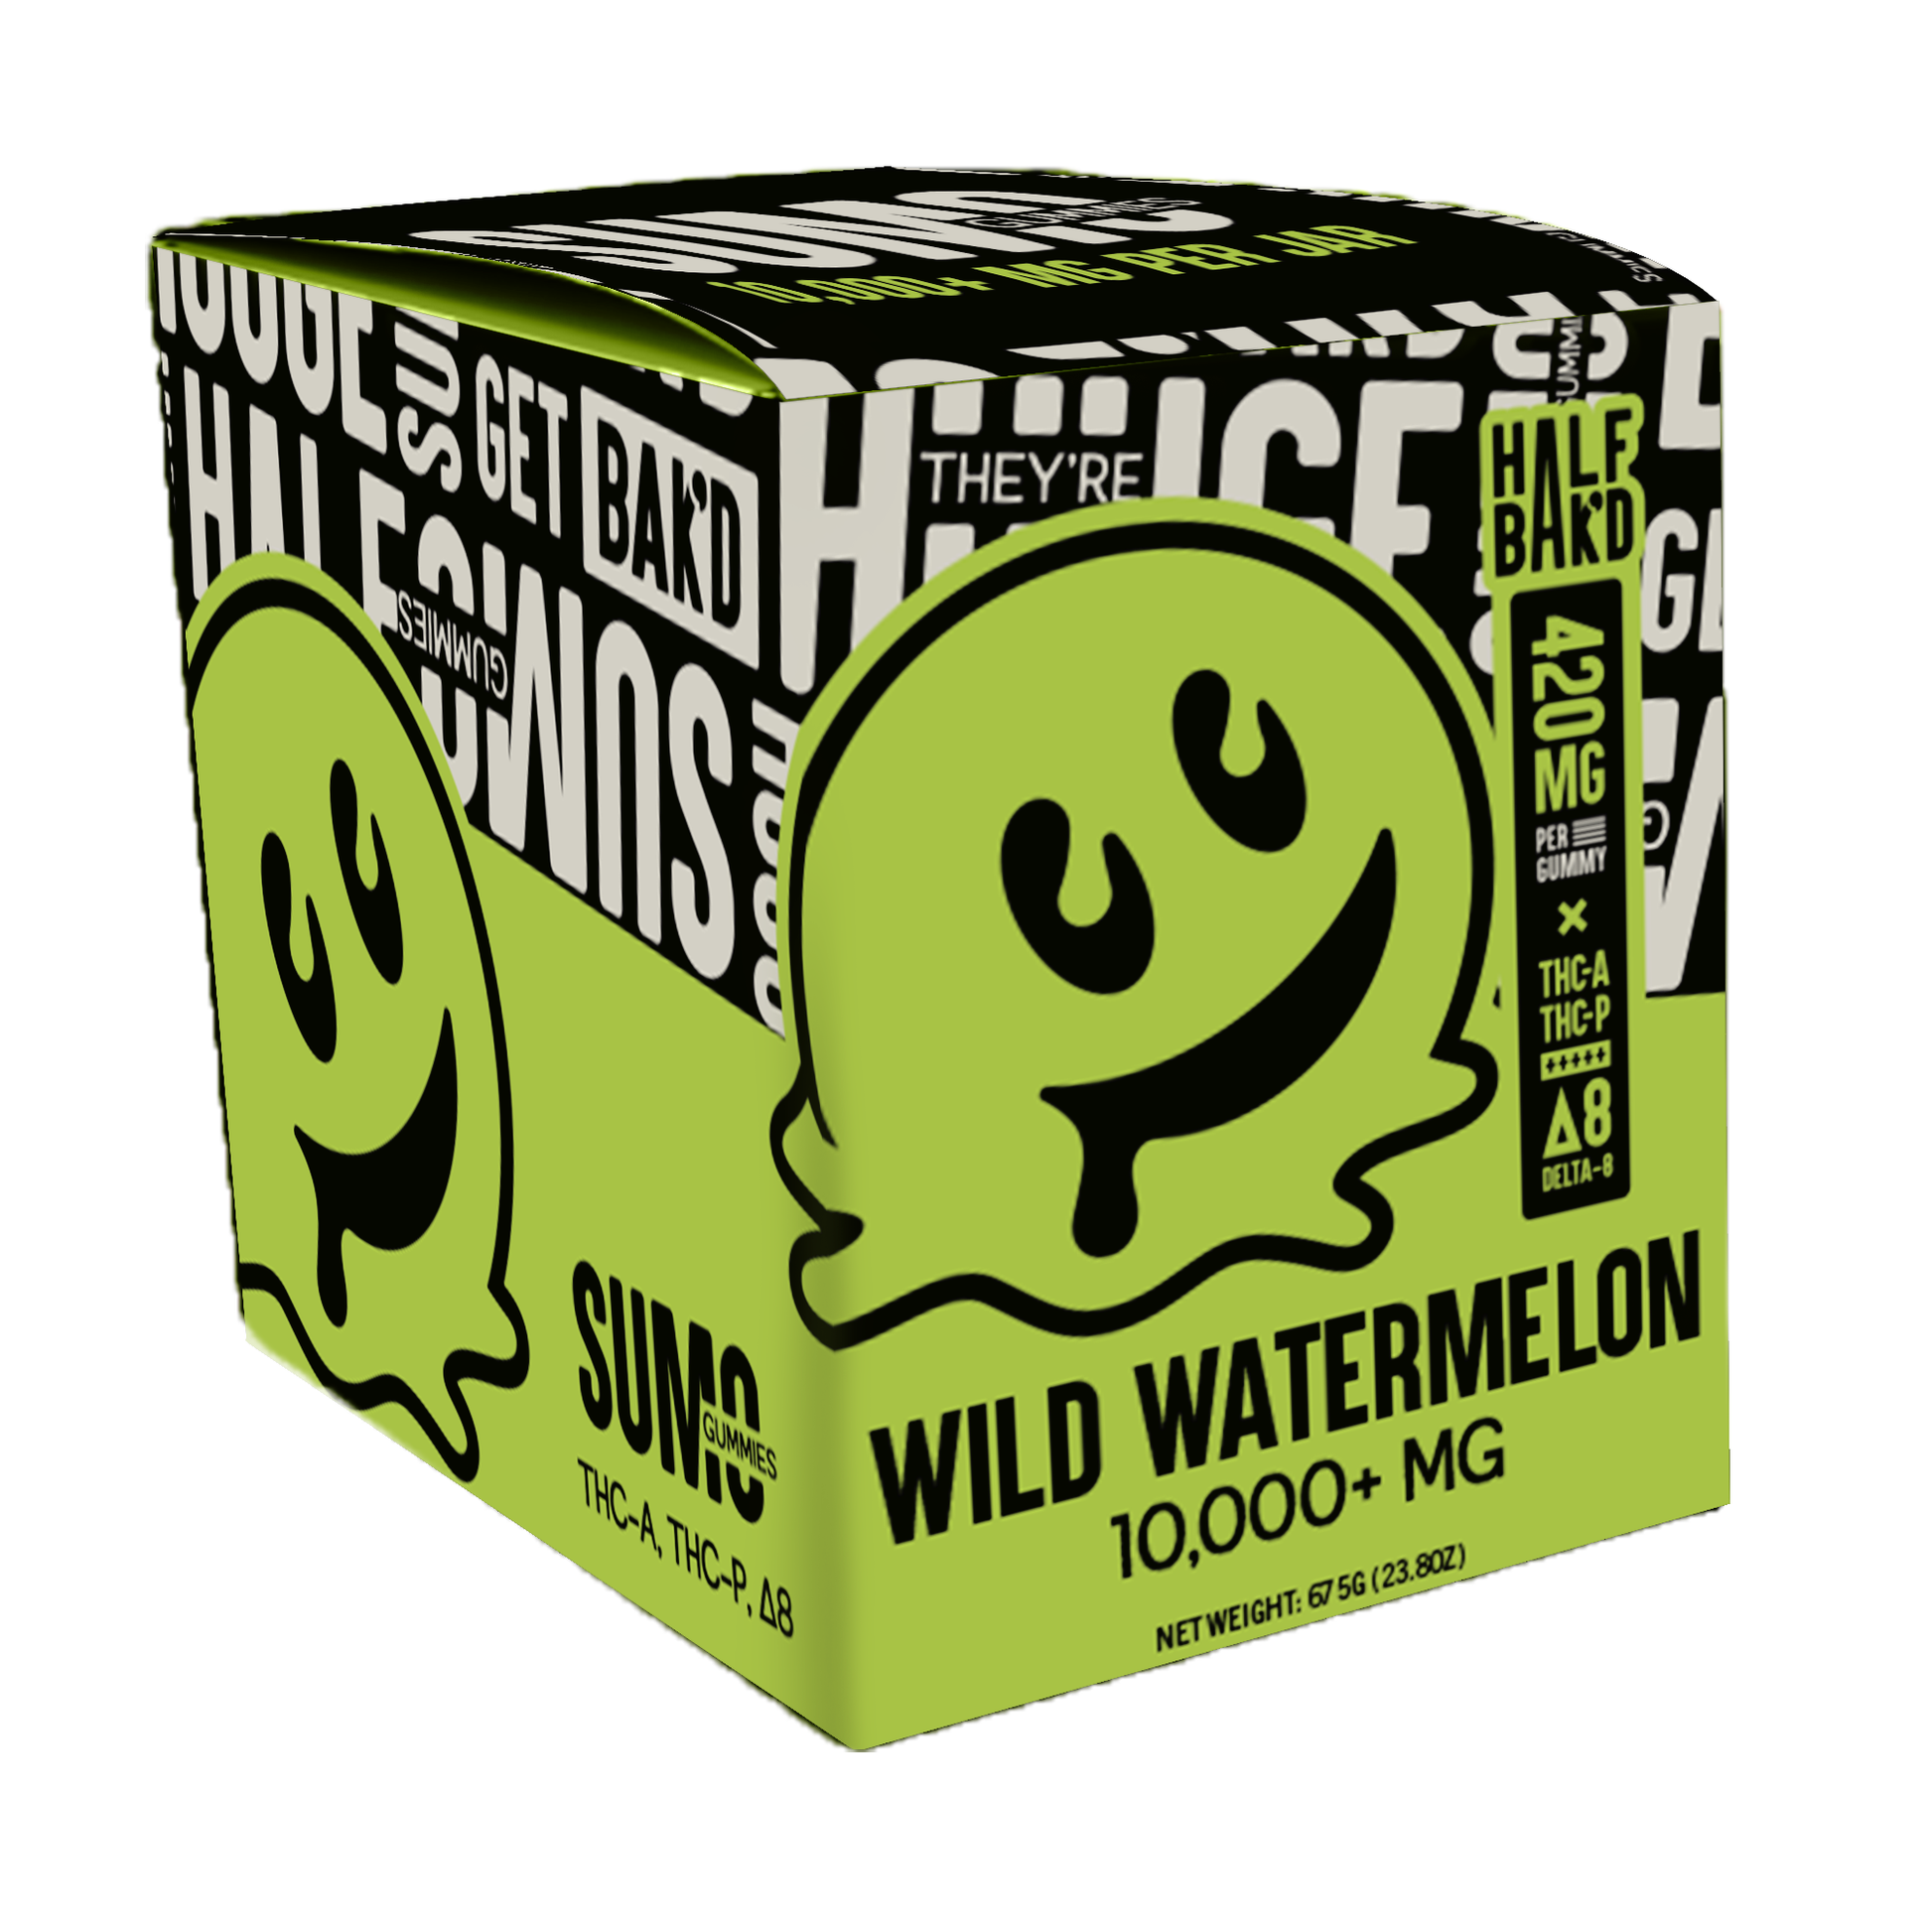 Wild Watermelon 10,000+ MG - Sumo Gummies